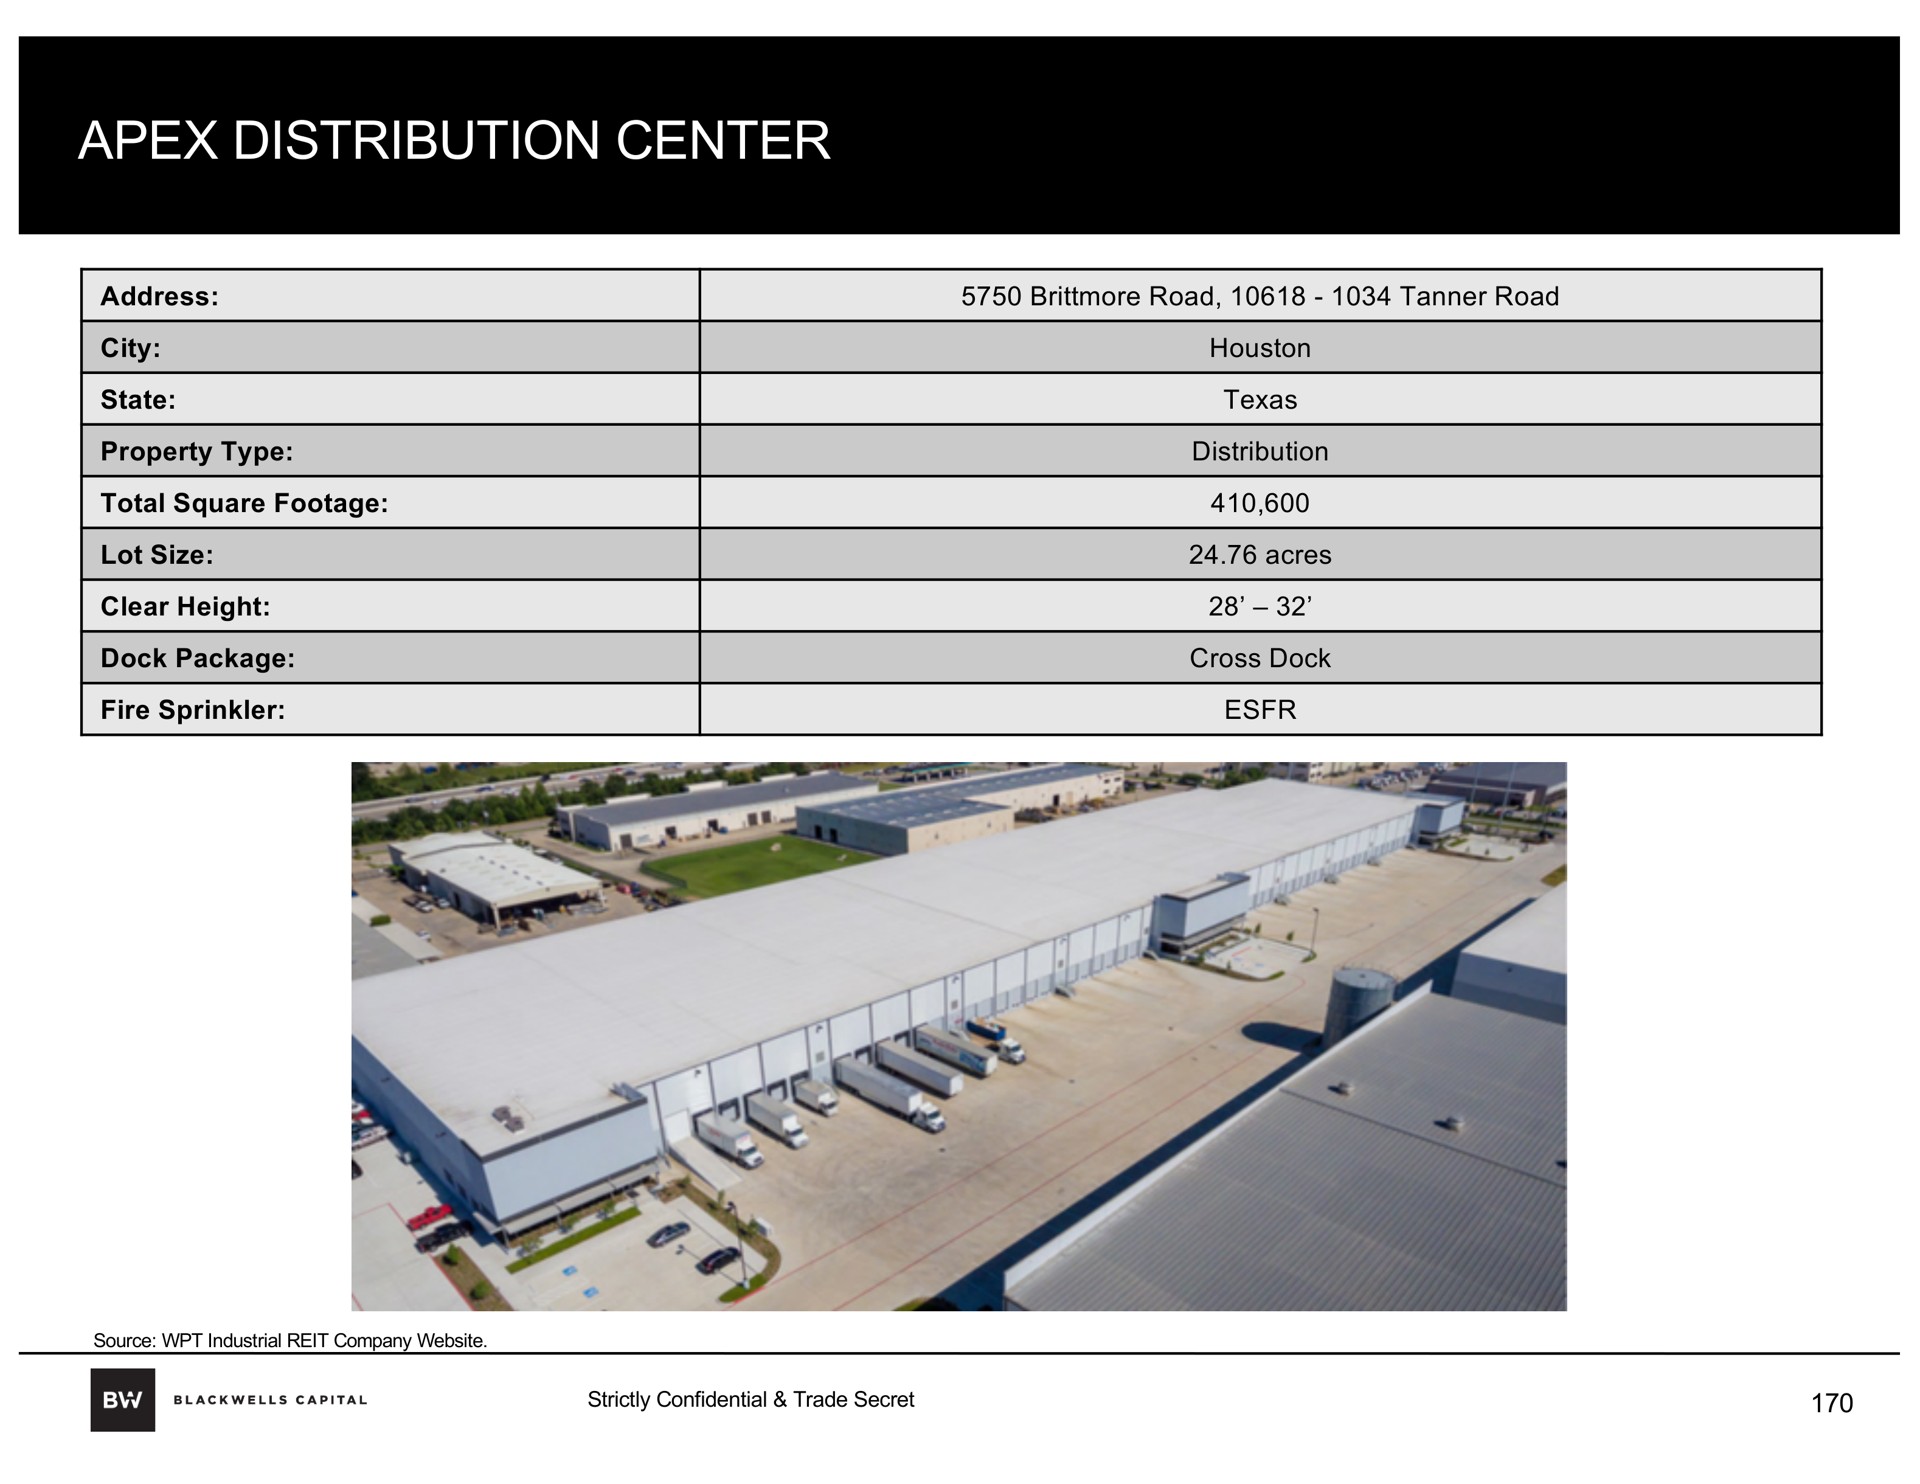 apex distribution center | Blackwells Capital